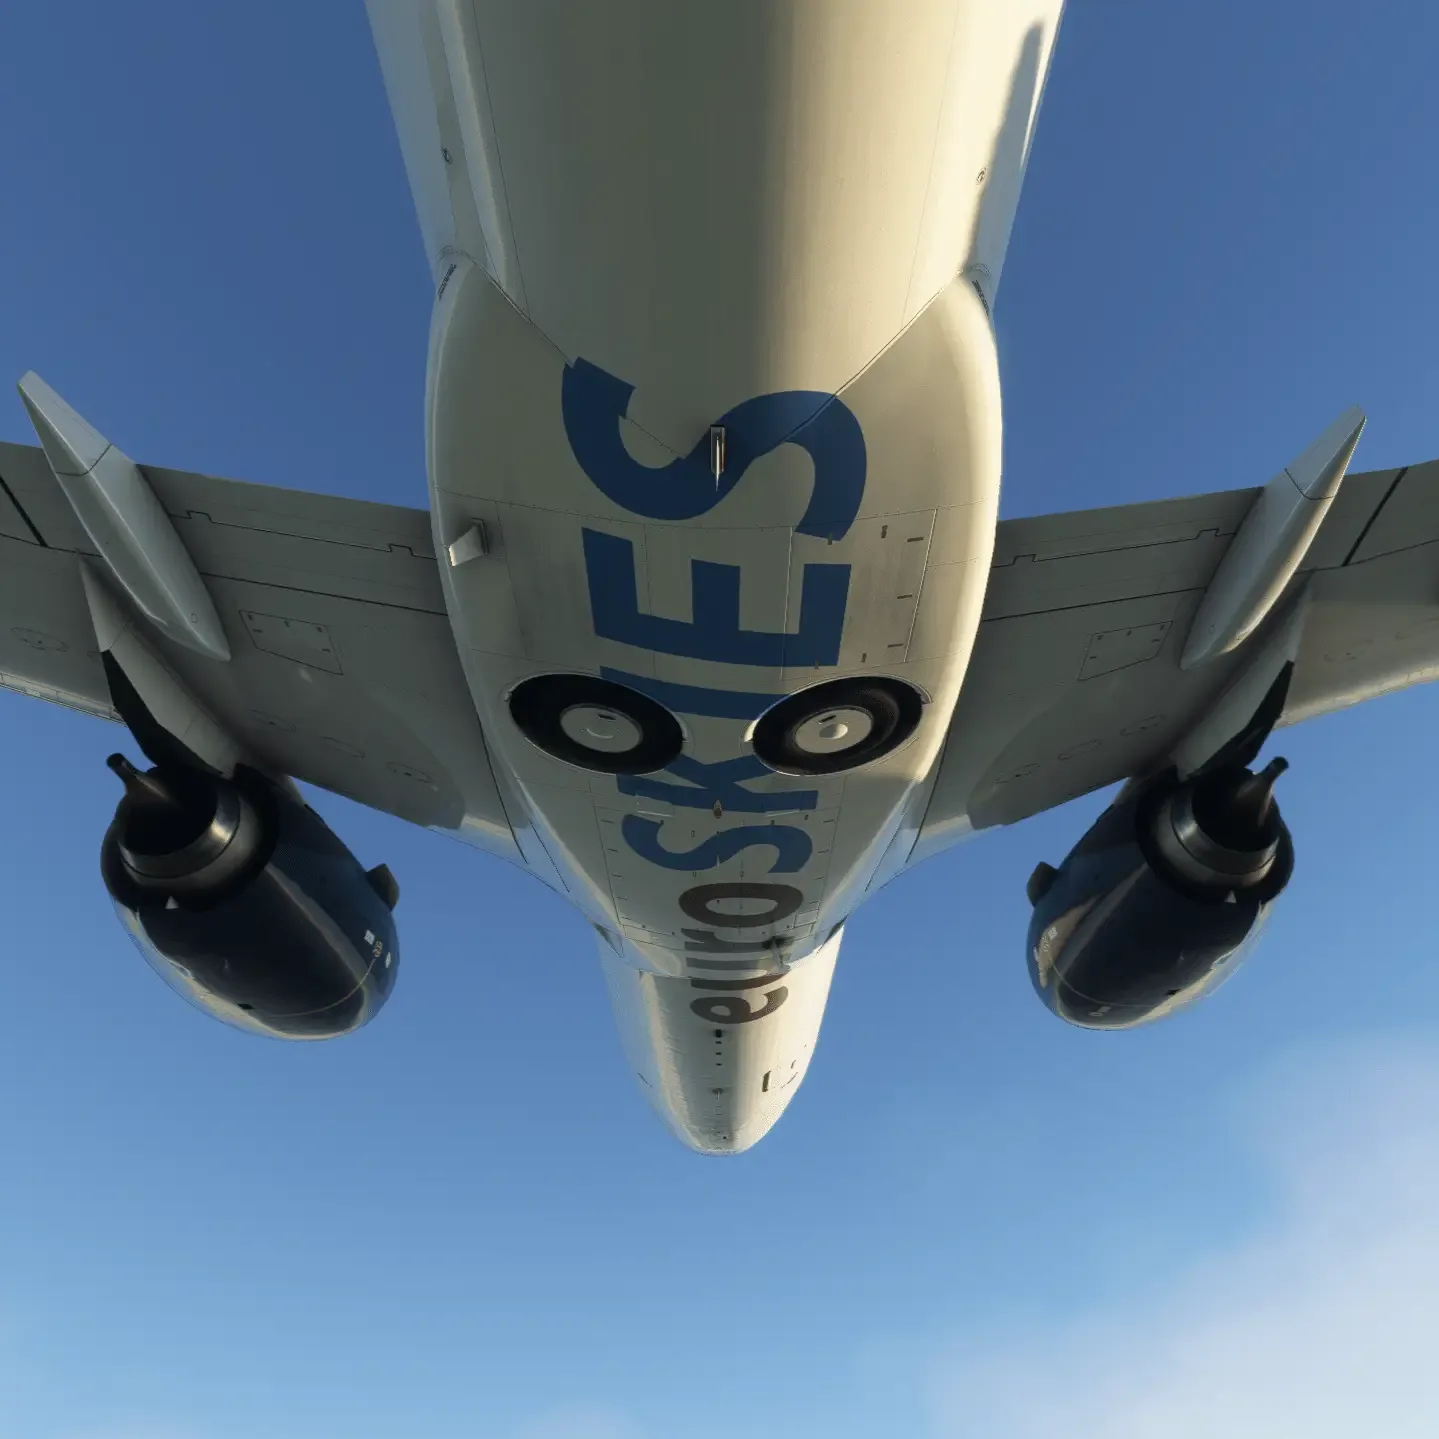 PMDG 737-800 euroSKIES virtual airline belly view with euroSKIES lettering.